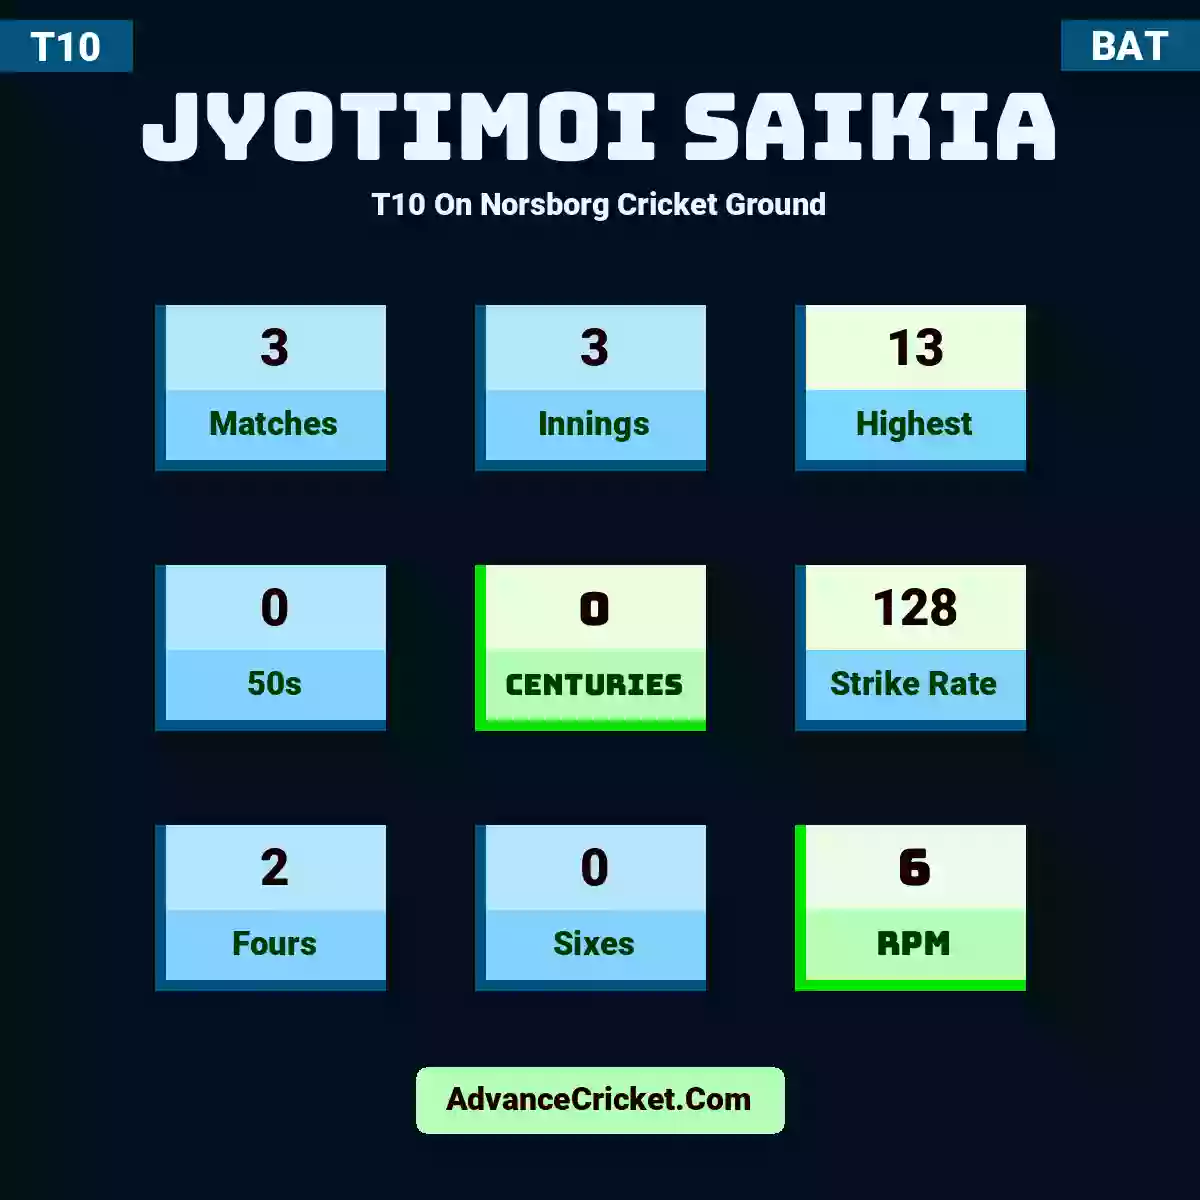 Jyotimoi Saikia T10  On Norsborg Cricket Ground, Jyotimoi Saikia played 3 matches, scored 13 runs as highest, 0 half-centuries, and 0 centuries, with a strike rate of 128. J.Saikia hit 2 fours and 0 sixes, with an RPM of 6.